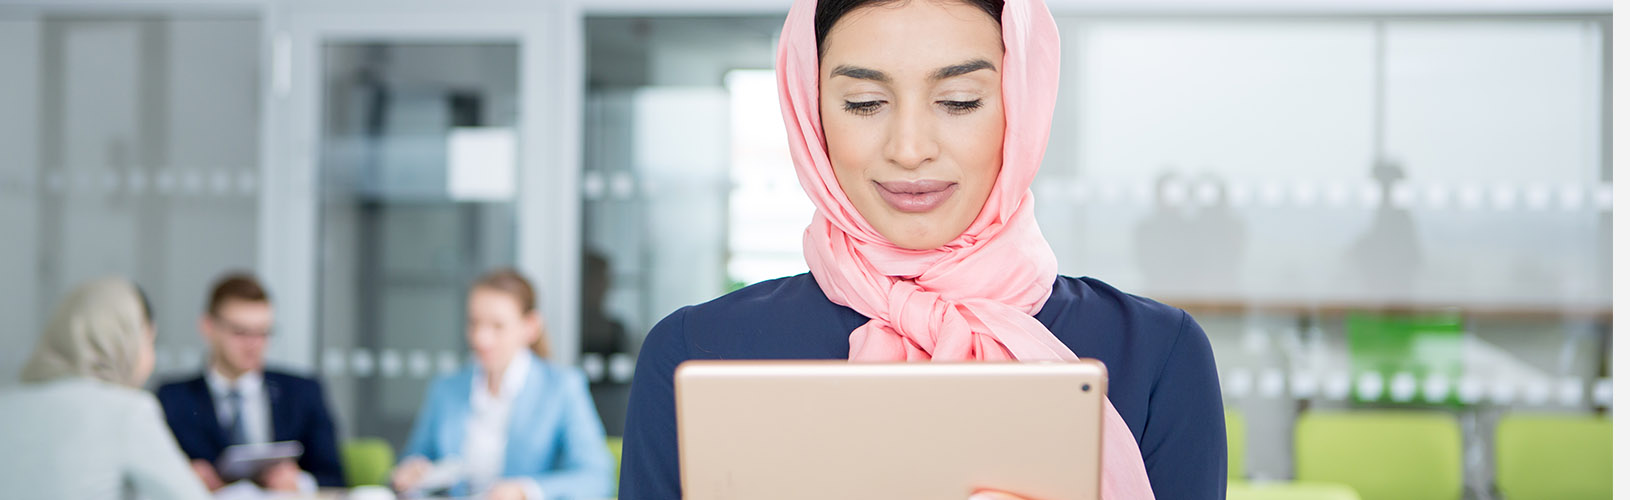 Muslim woman reviews internal audit management best practices on a tablet.